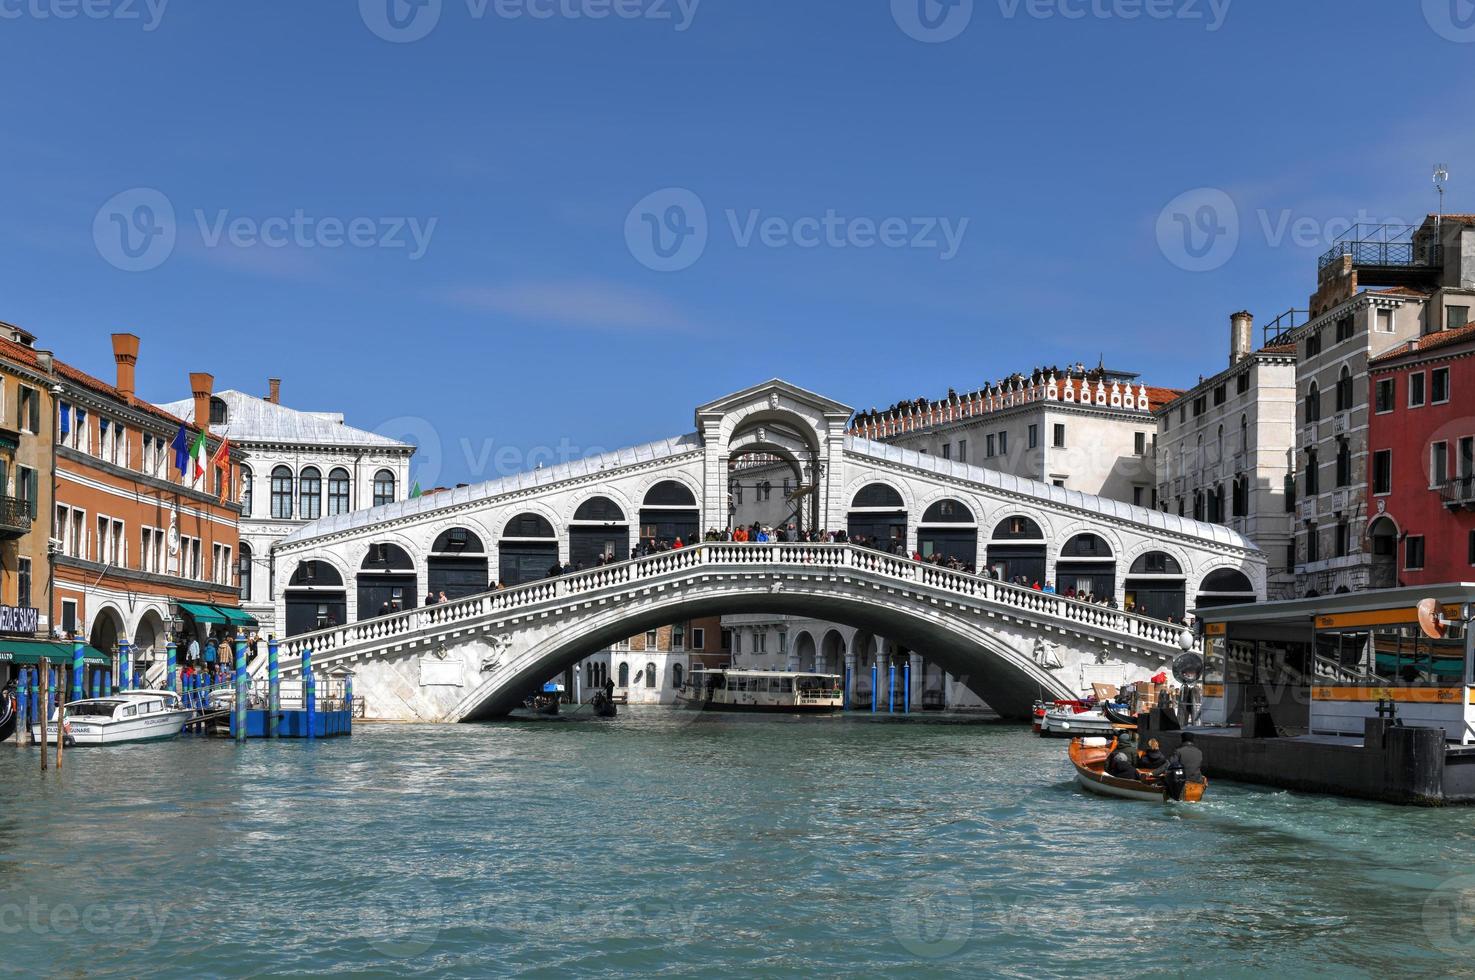 The Rialto bridge along the Grand canal in Venice, Italy photo